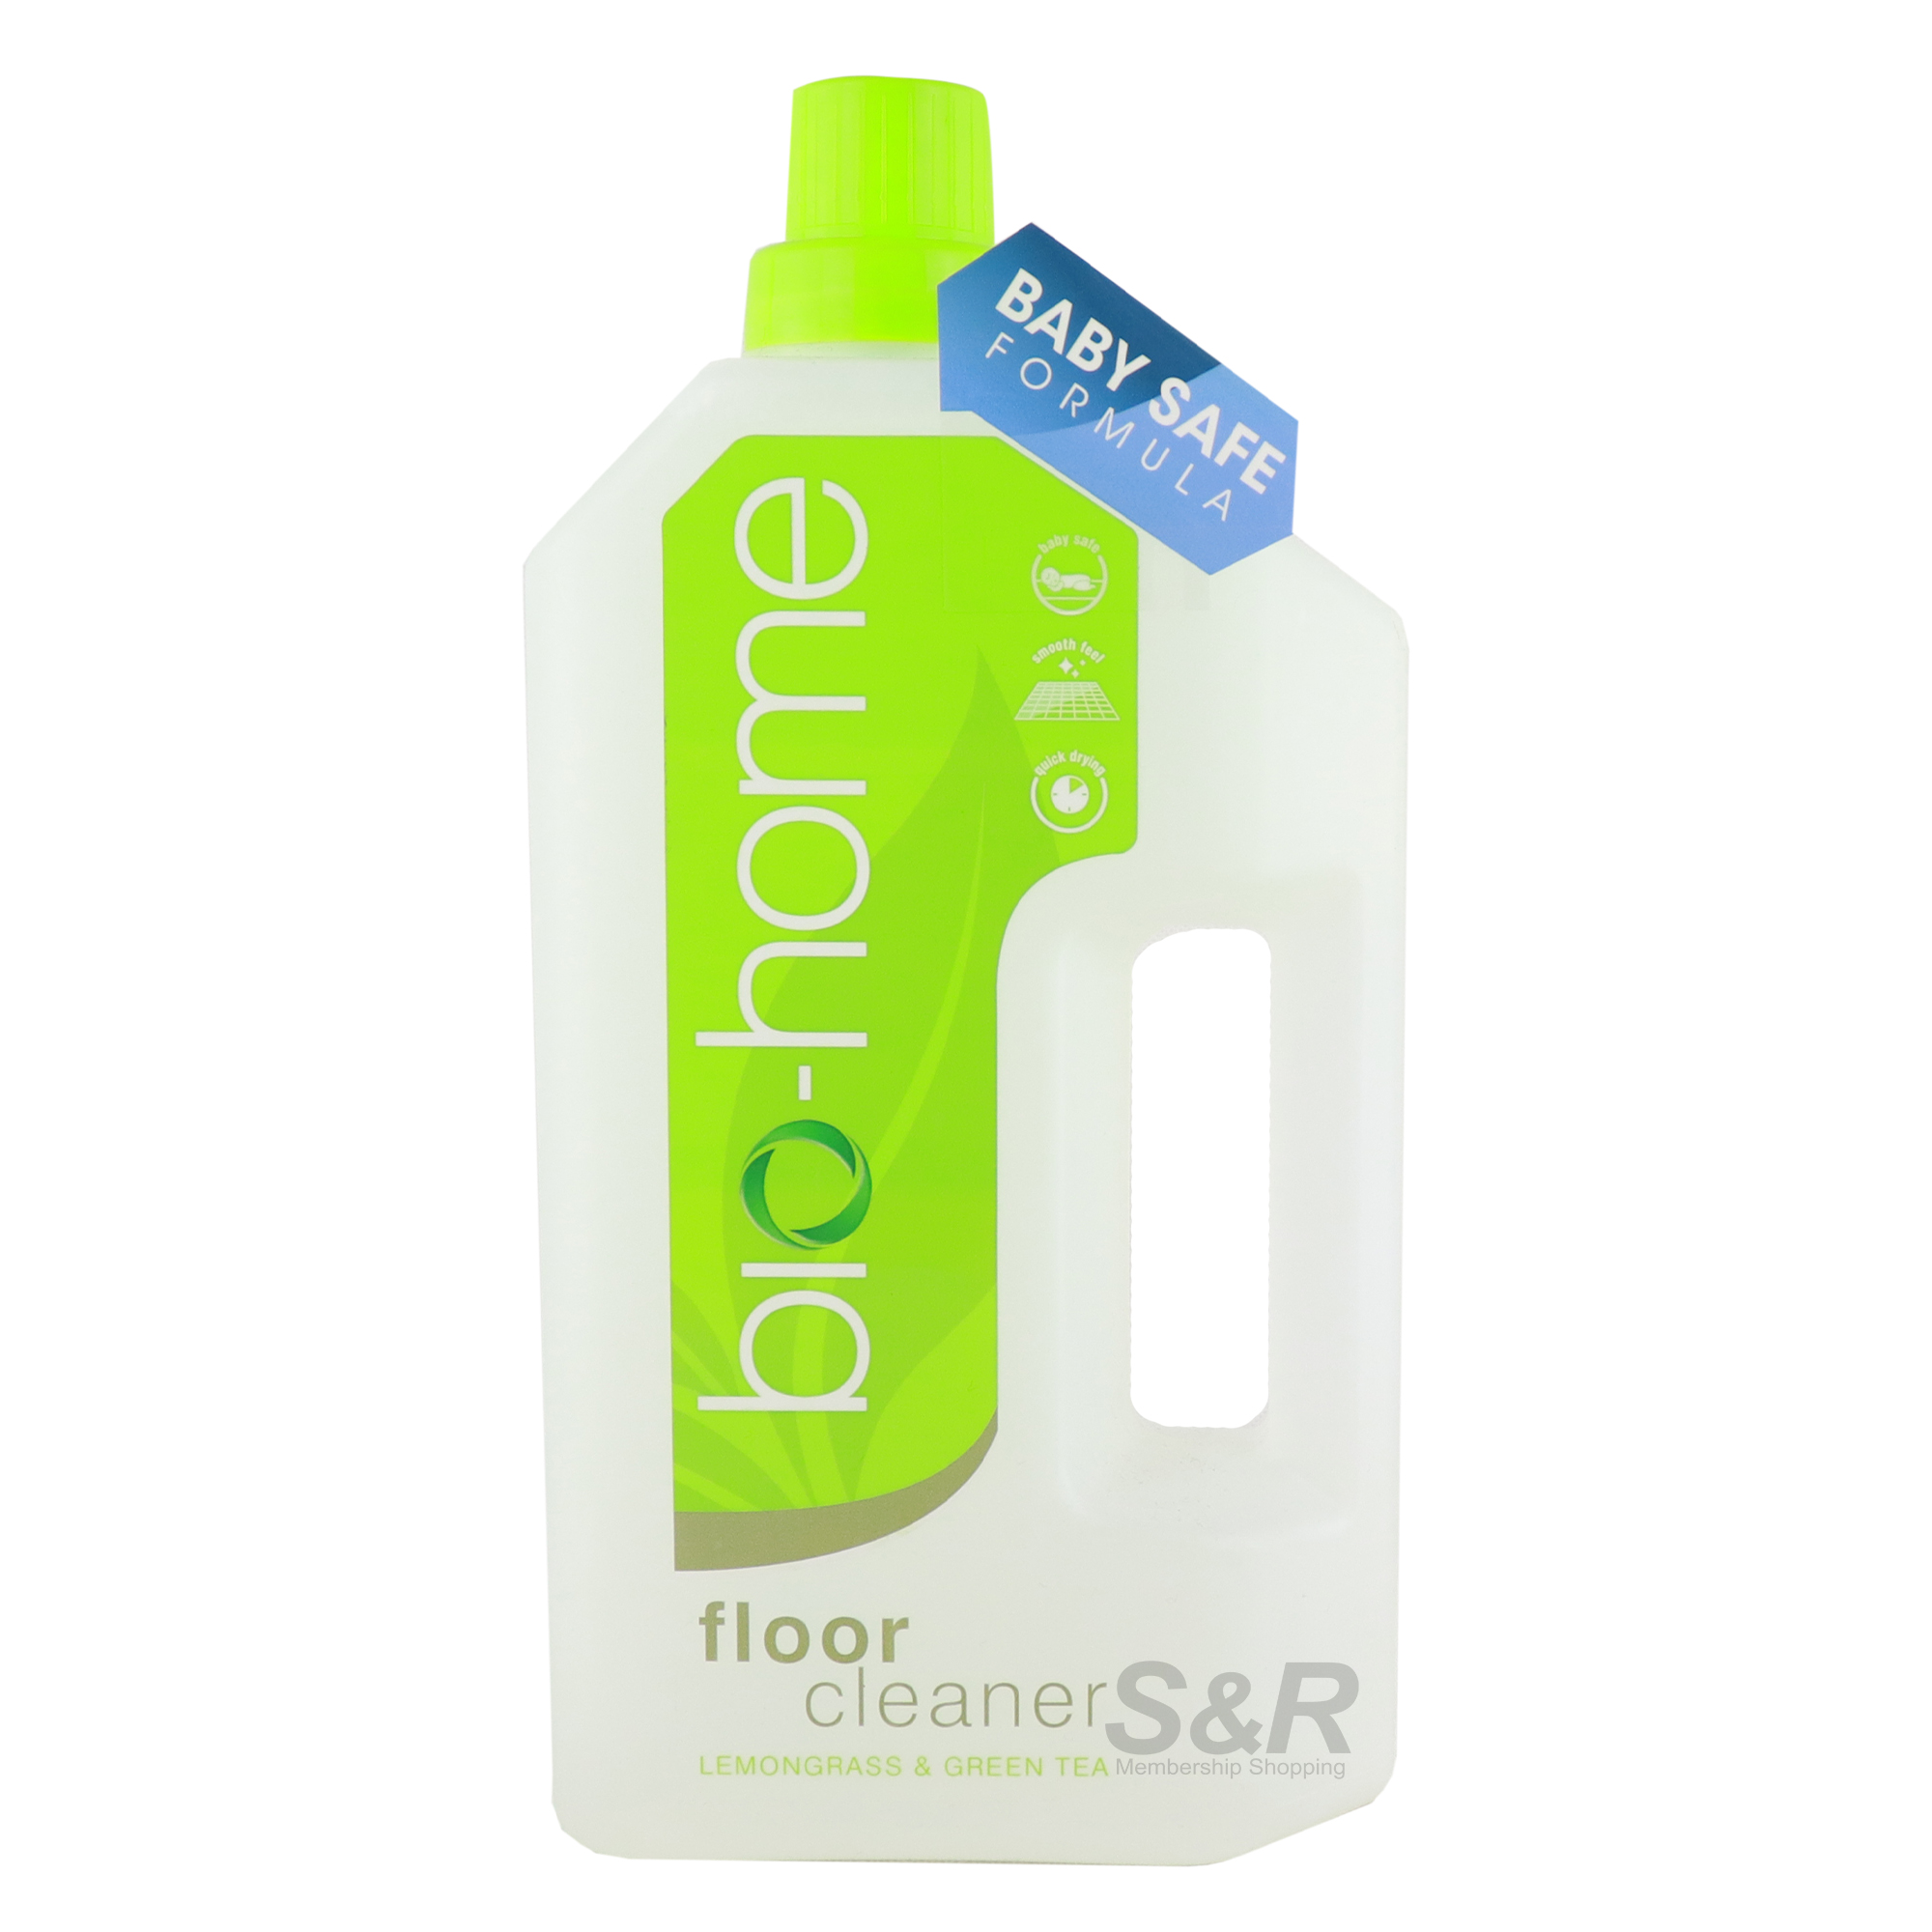 Bio-Home Floor Cleaner Baby Safe Formula Lemon Grass and Green Tea 1.5L